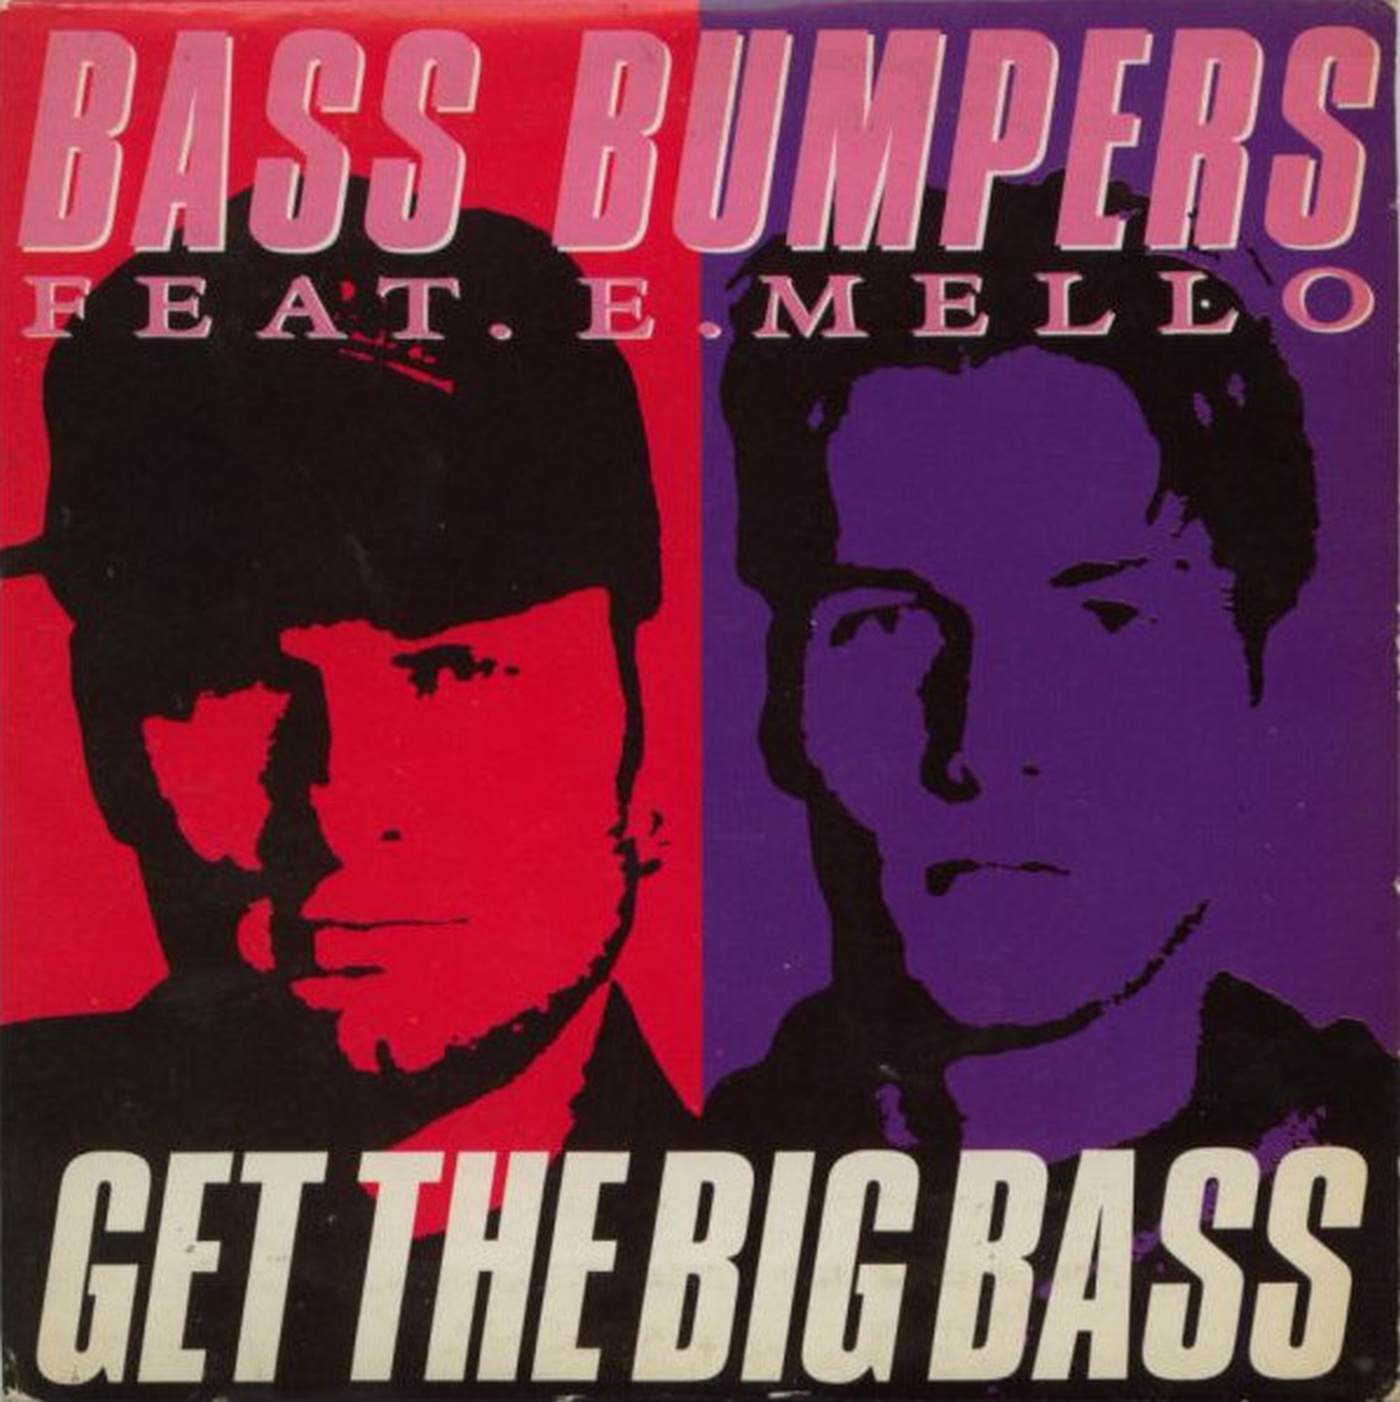 Bass bumpers. Bass Bumpers - the m.e.l.l.o. год. Bass Bumpers группа постеры. Bass Bumpers Mega Bump.